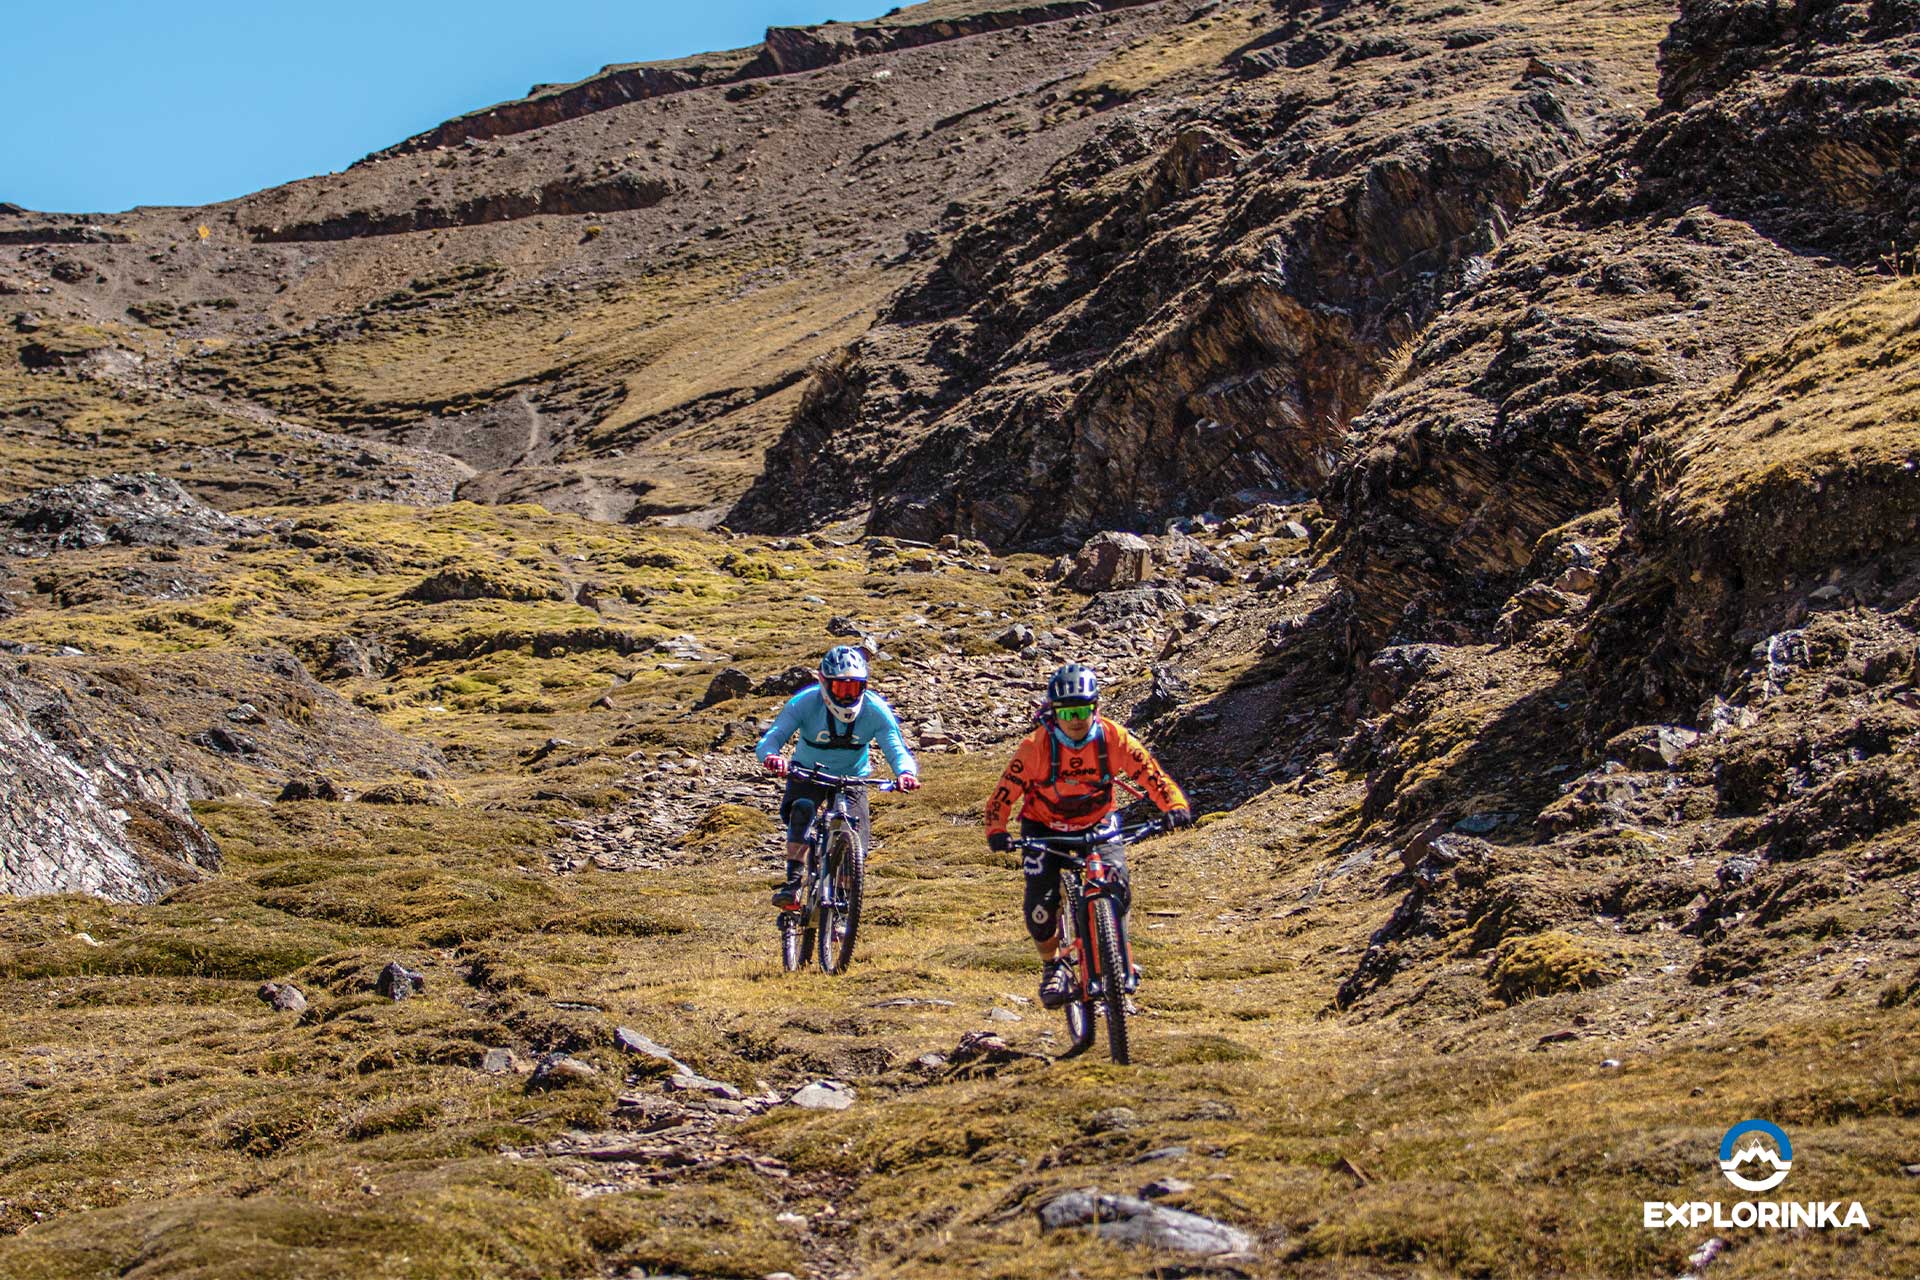 Bajada de lares - Safety tips for mountain biking in Peru